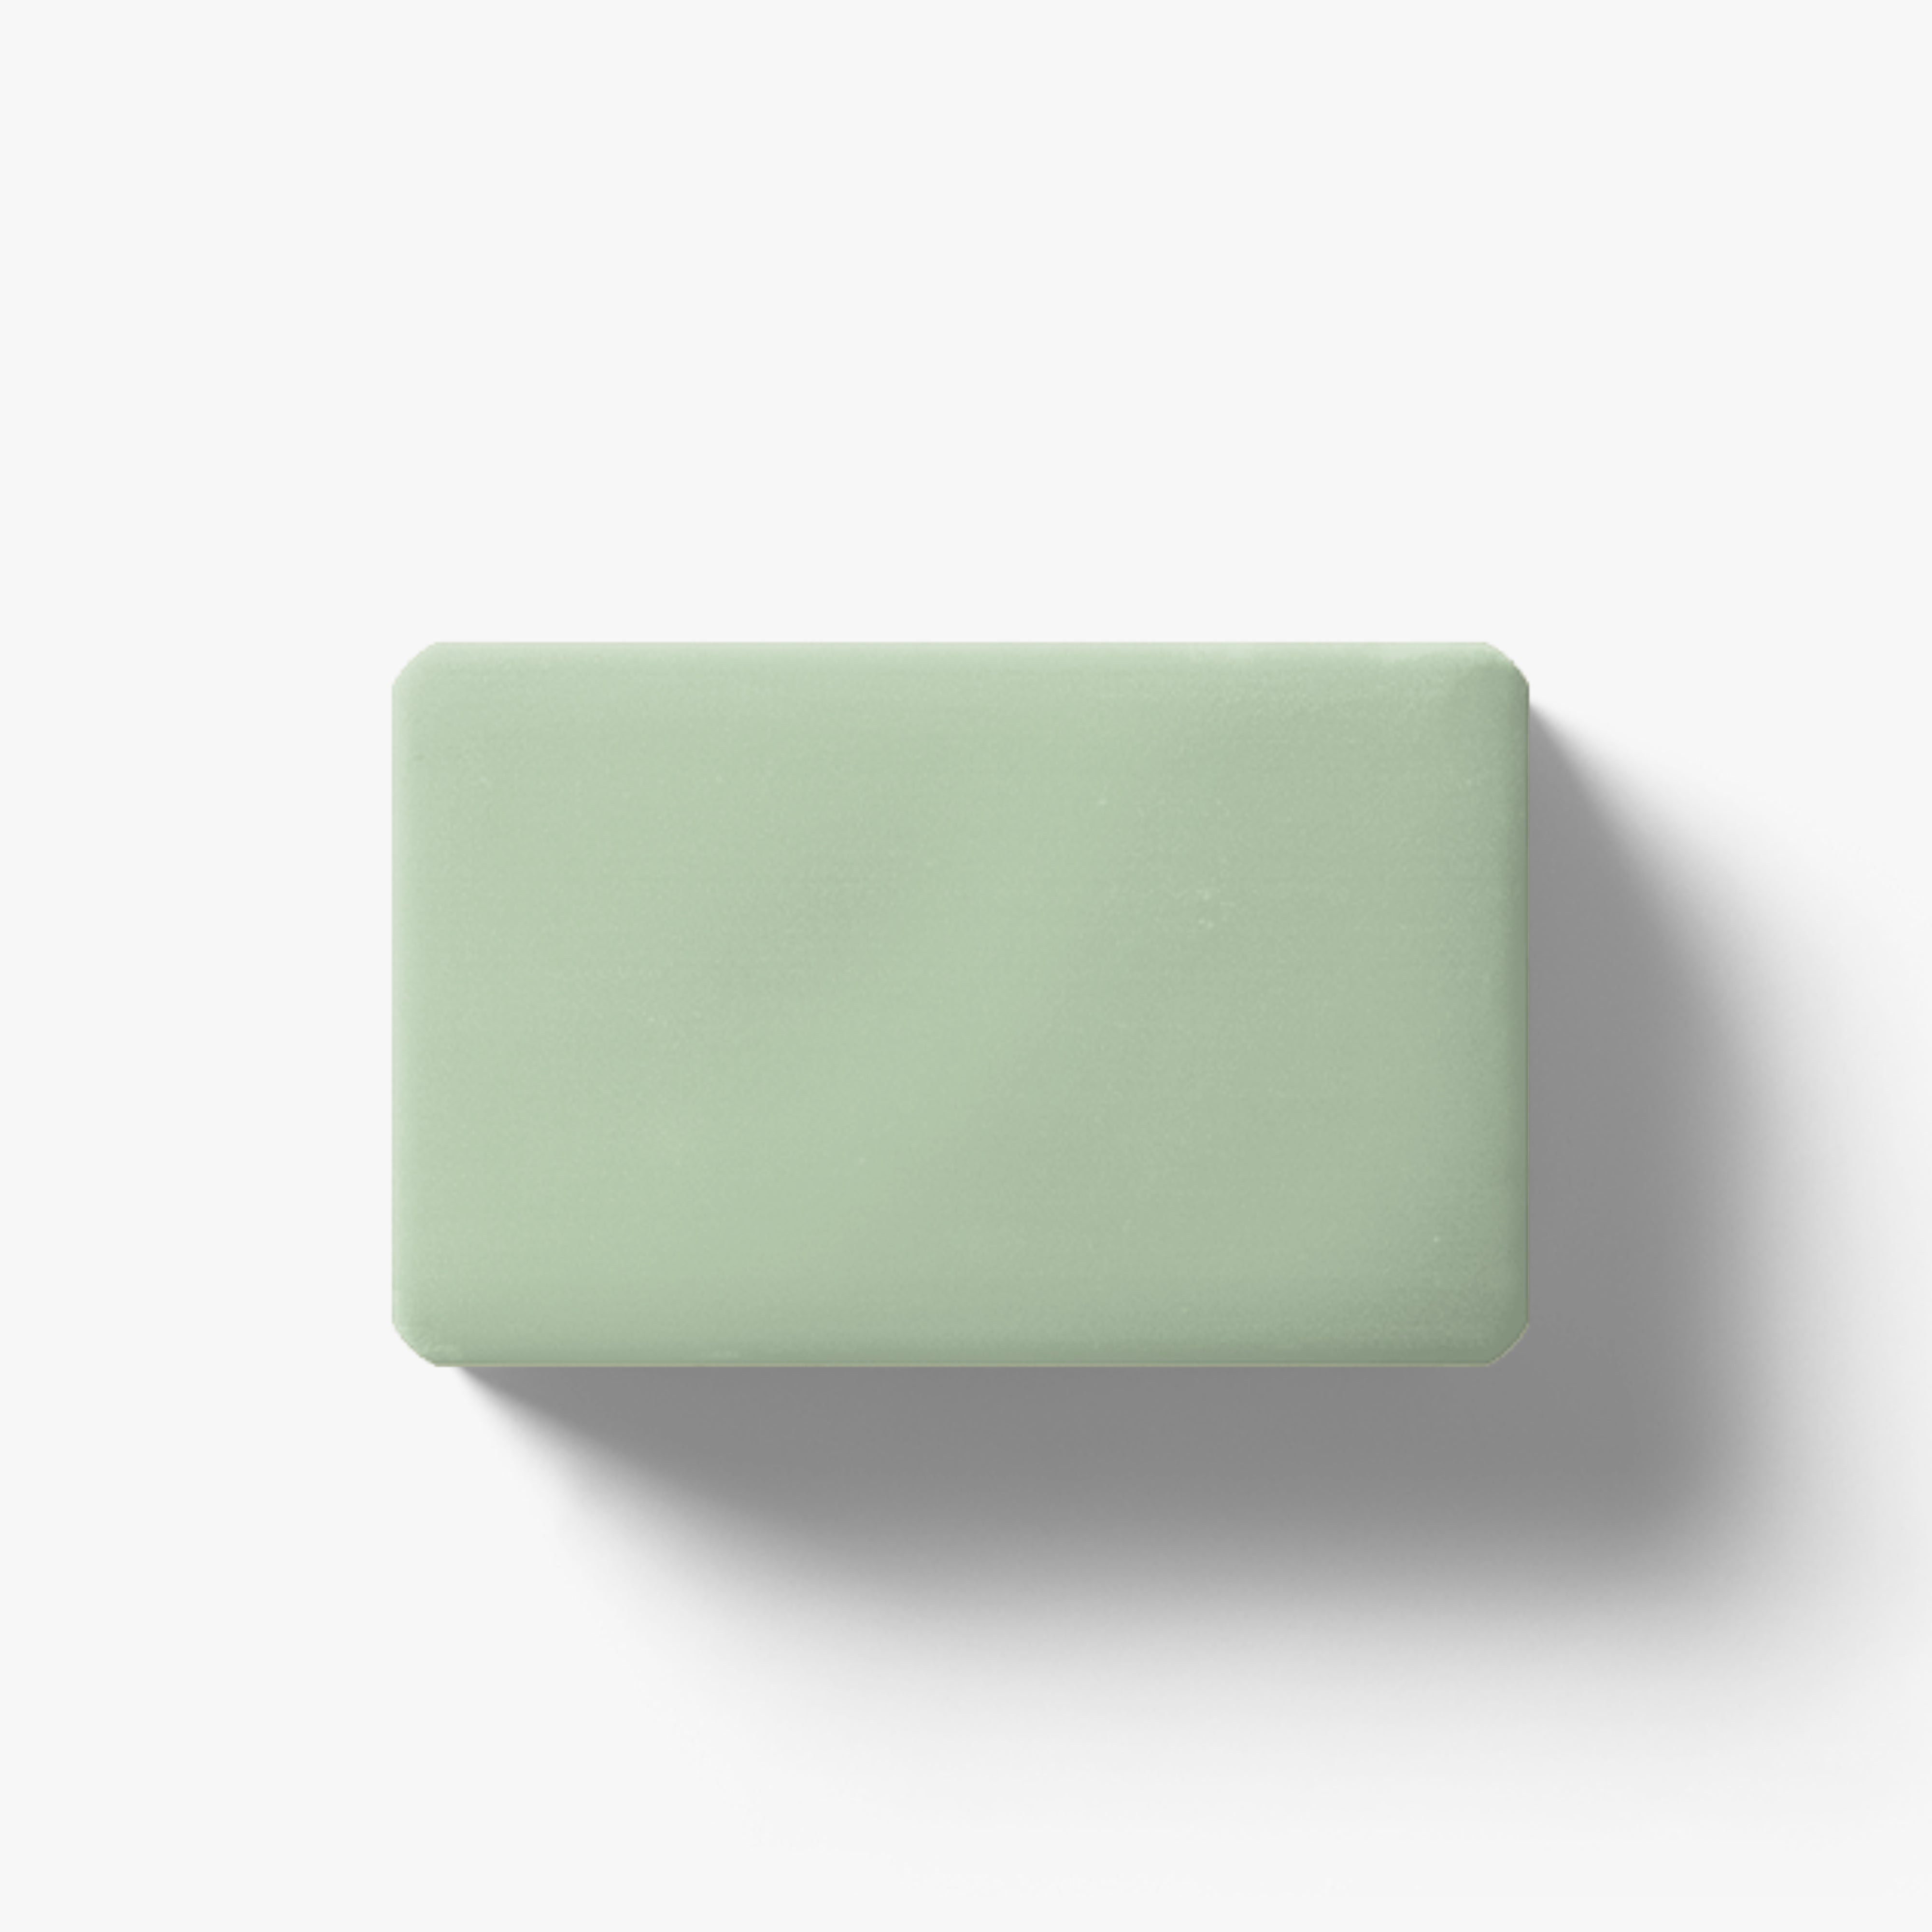 Lime Soap Bar - Many size options